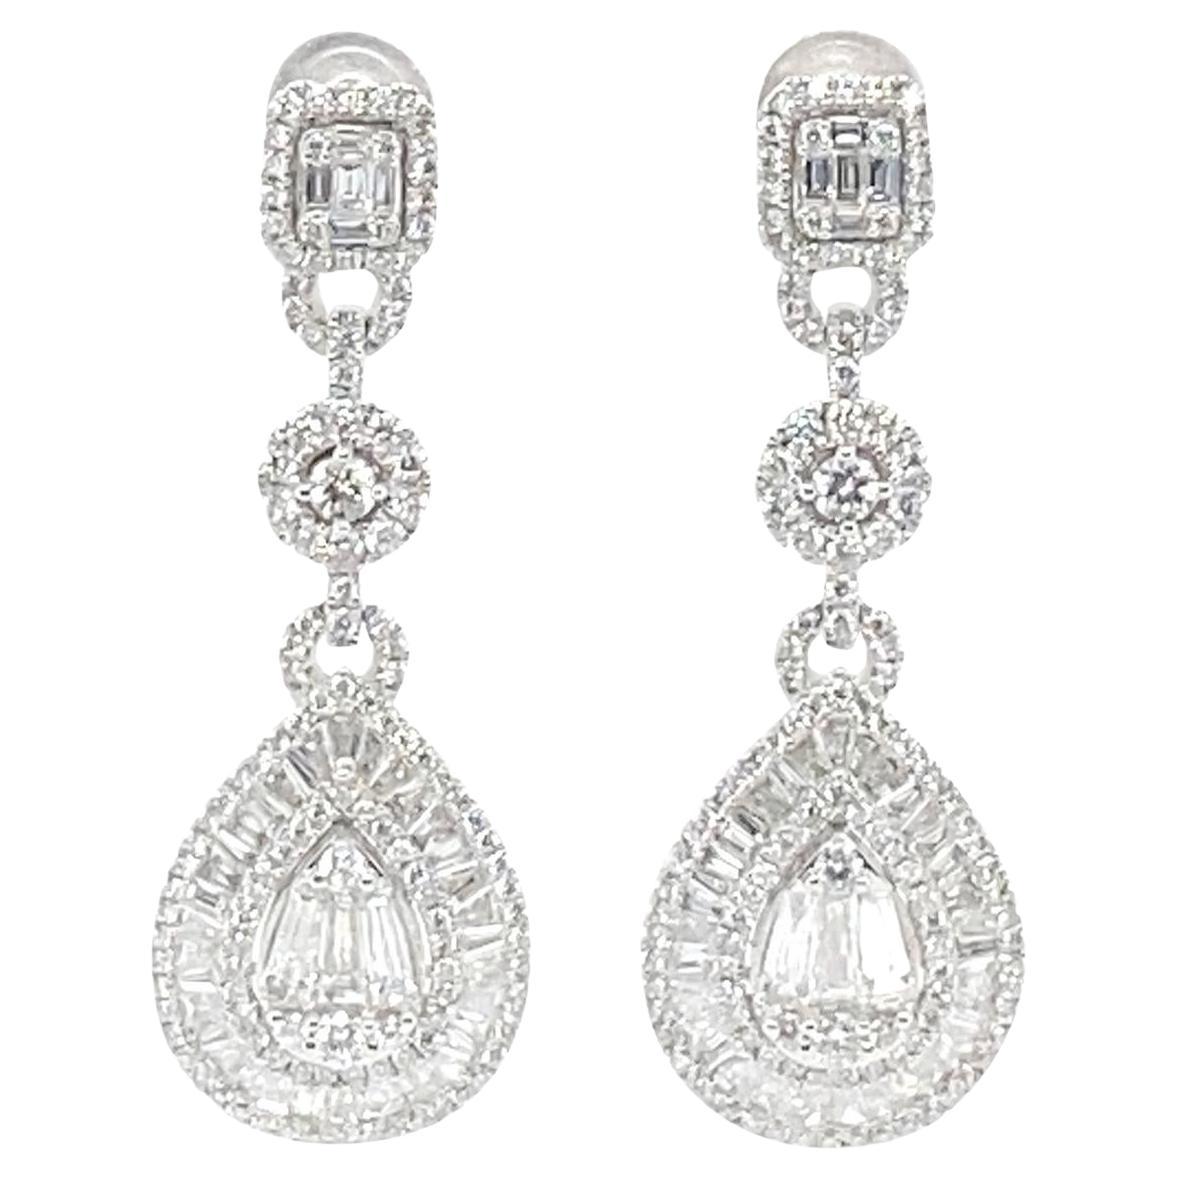 2.62 Carat Diamond Earrings